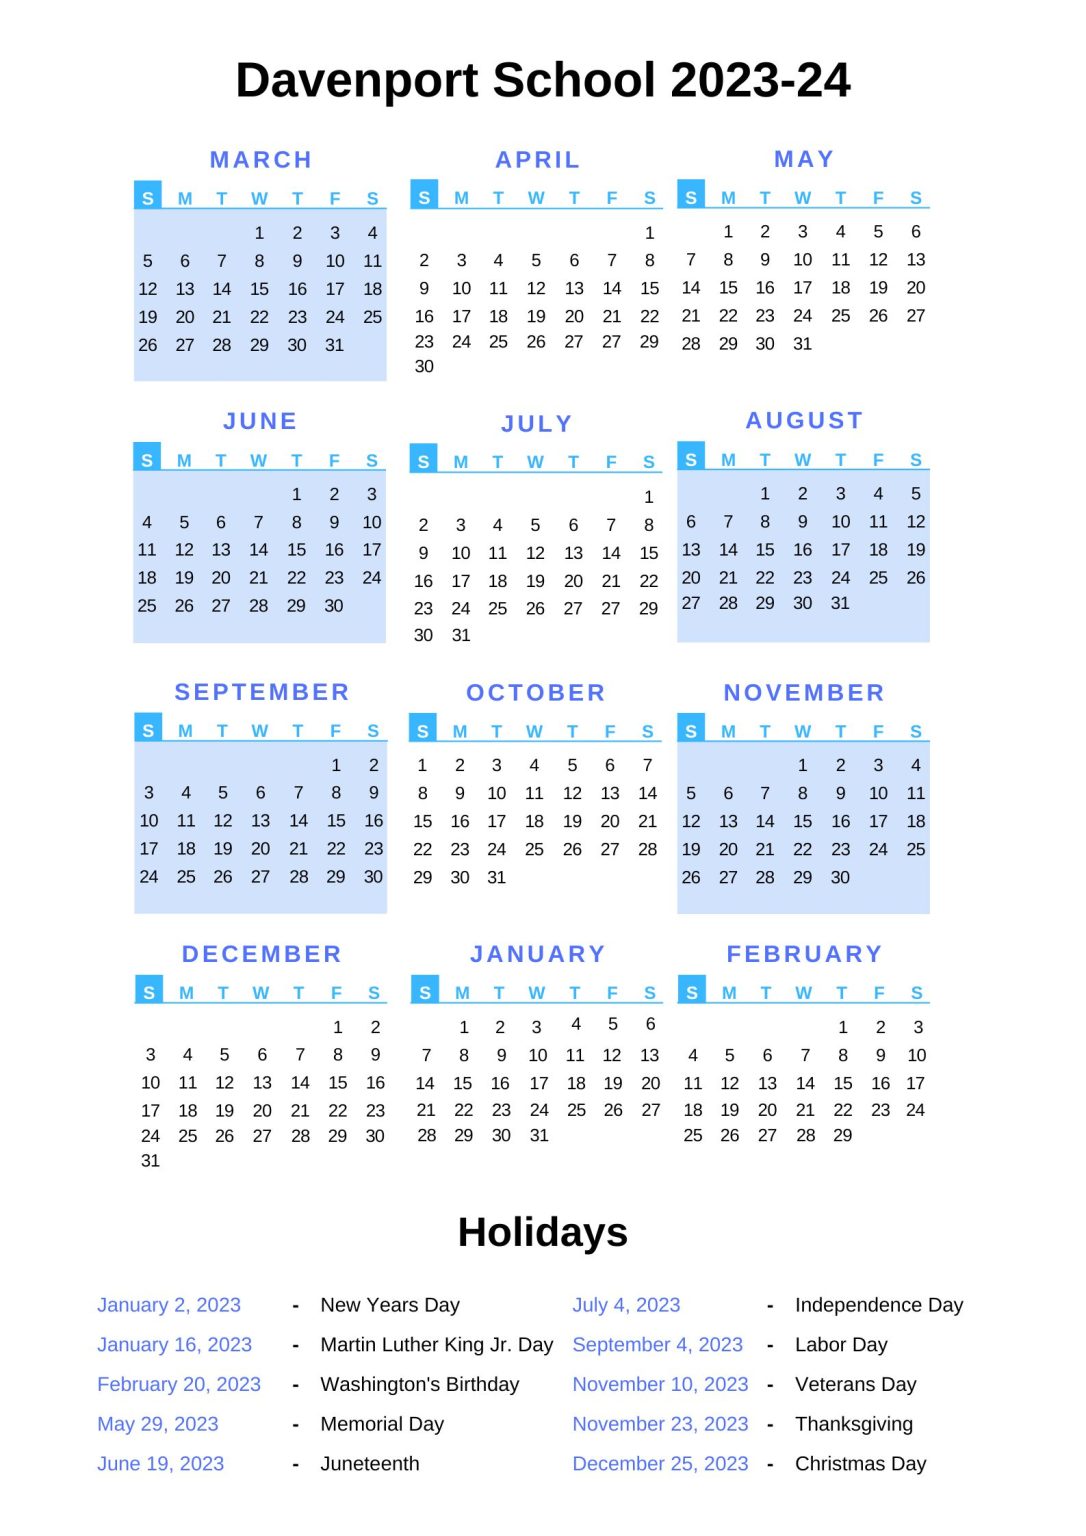 Davenport Schools Calendar 2023 24 With Holidays